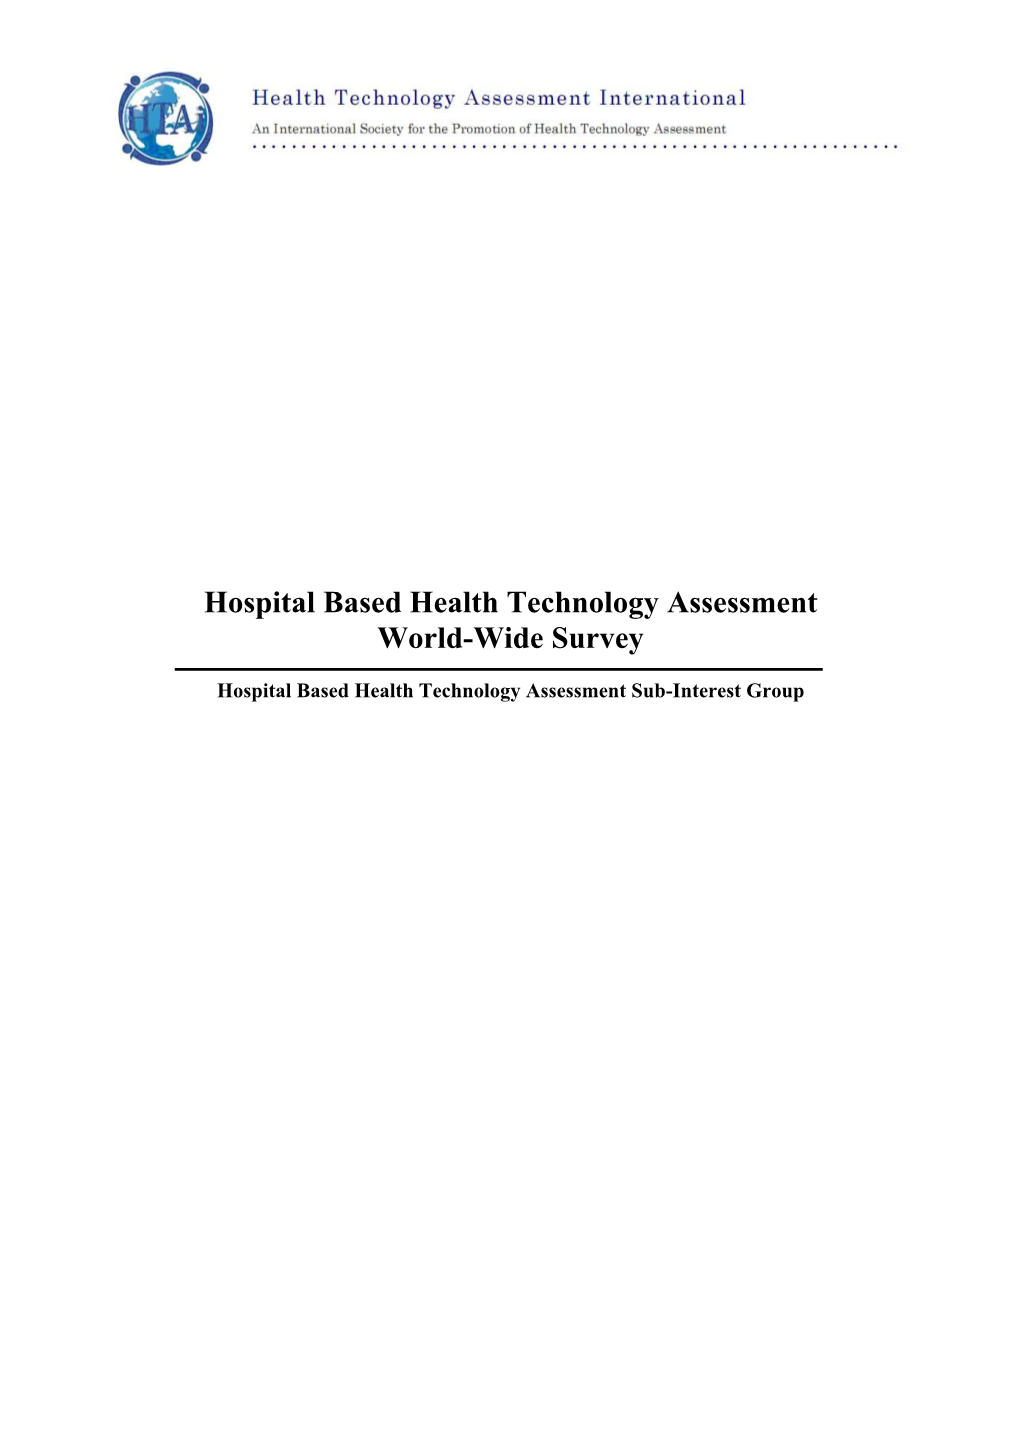 Hospital Based Health Technology Assessment World-Wide Survey